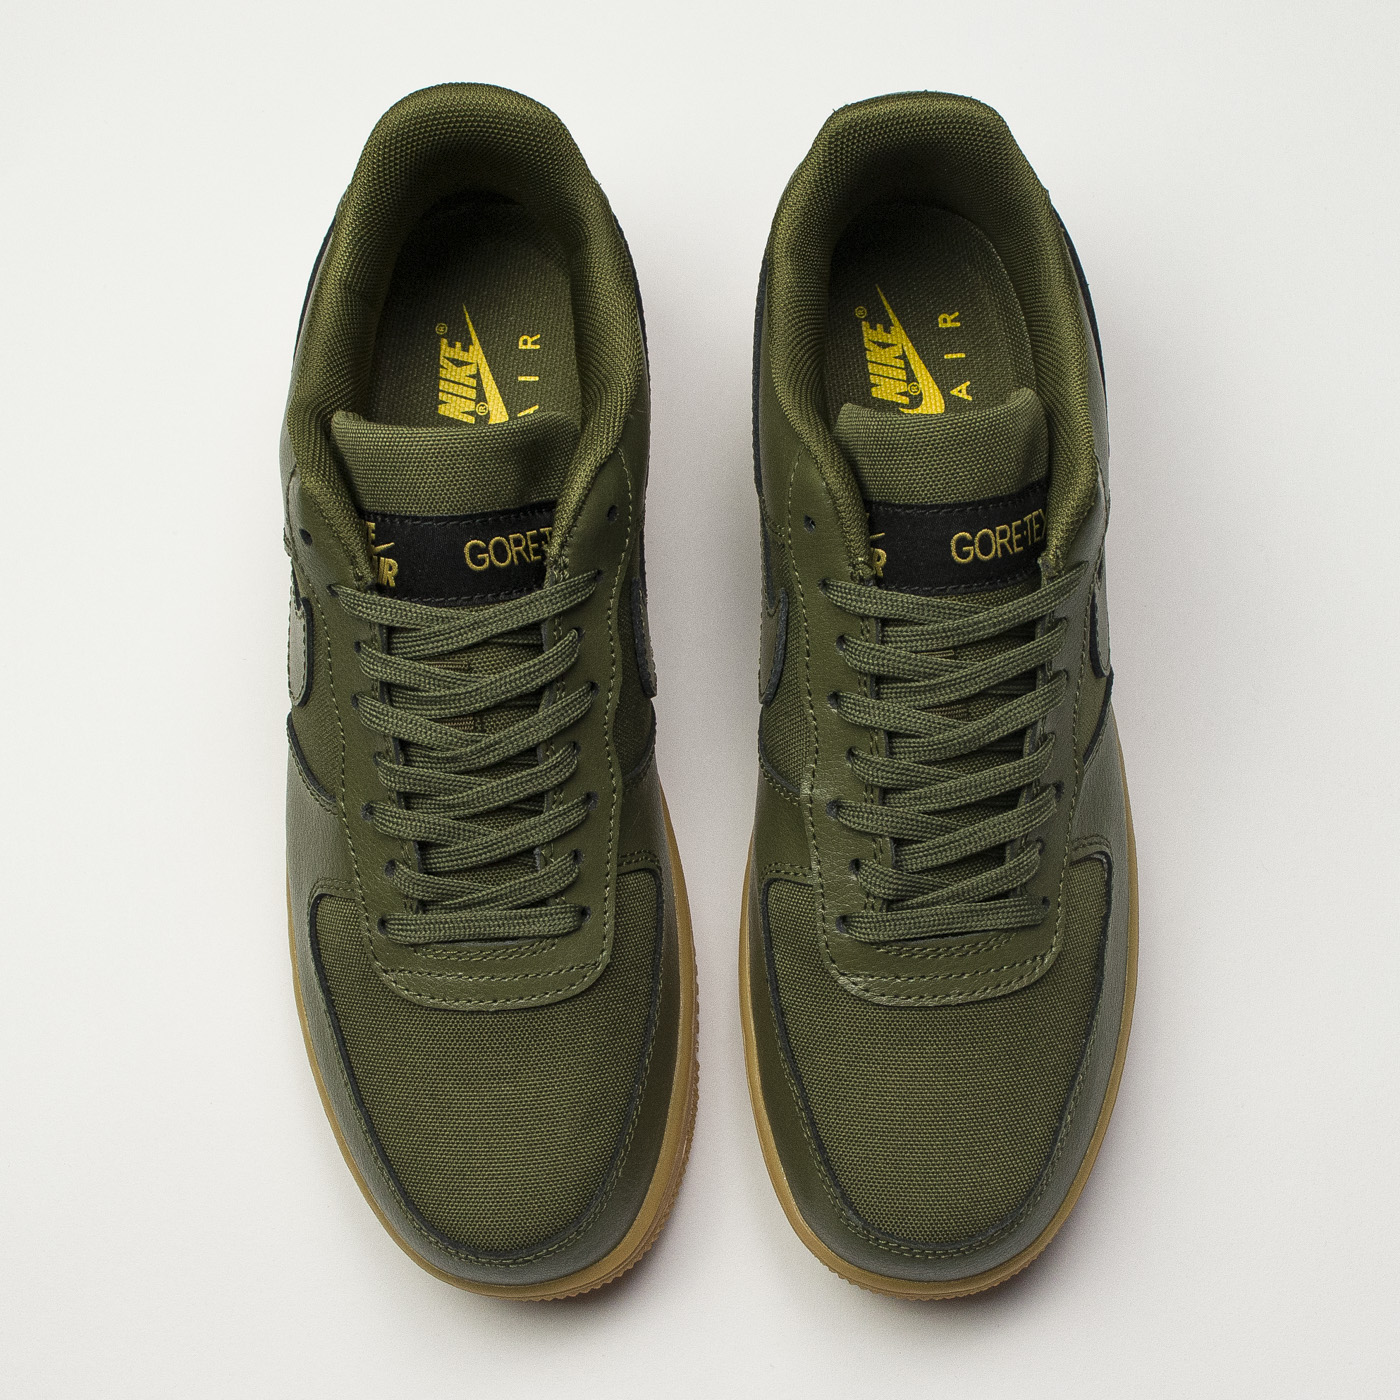 кроссовки Nike Air Force 1 Low Gore-tex Green / Gum купить за 4290 руб. винтернет магазине кроссовок Firebox